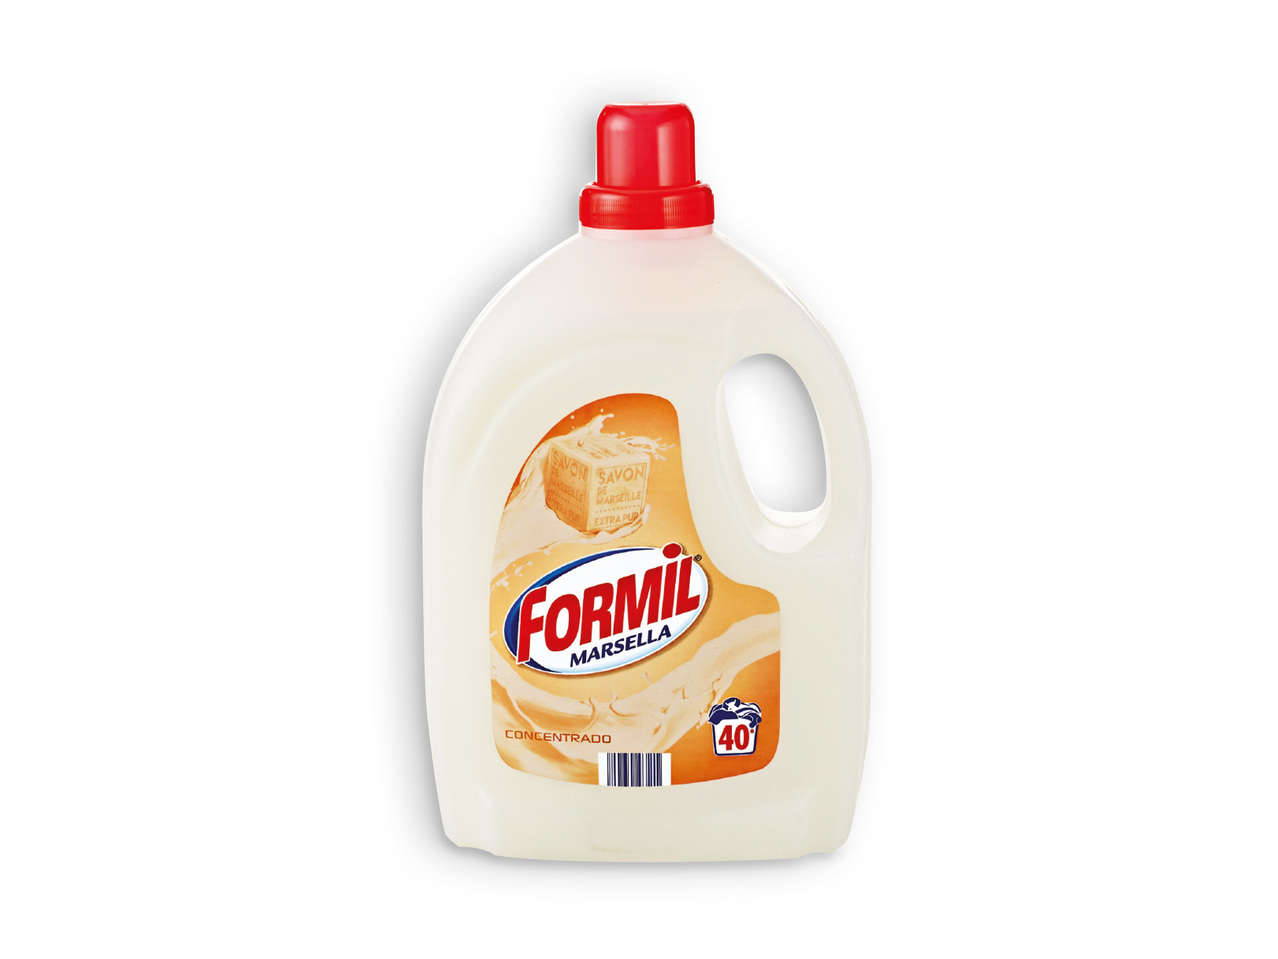 FORMIL(R) Detergente Líquido Sabão Marselha